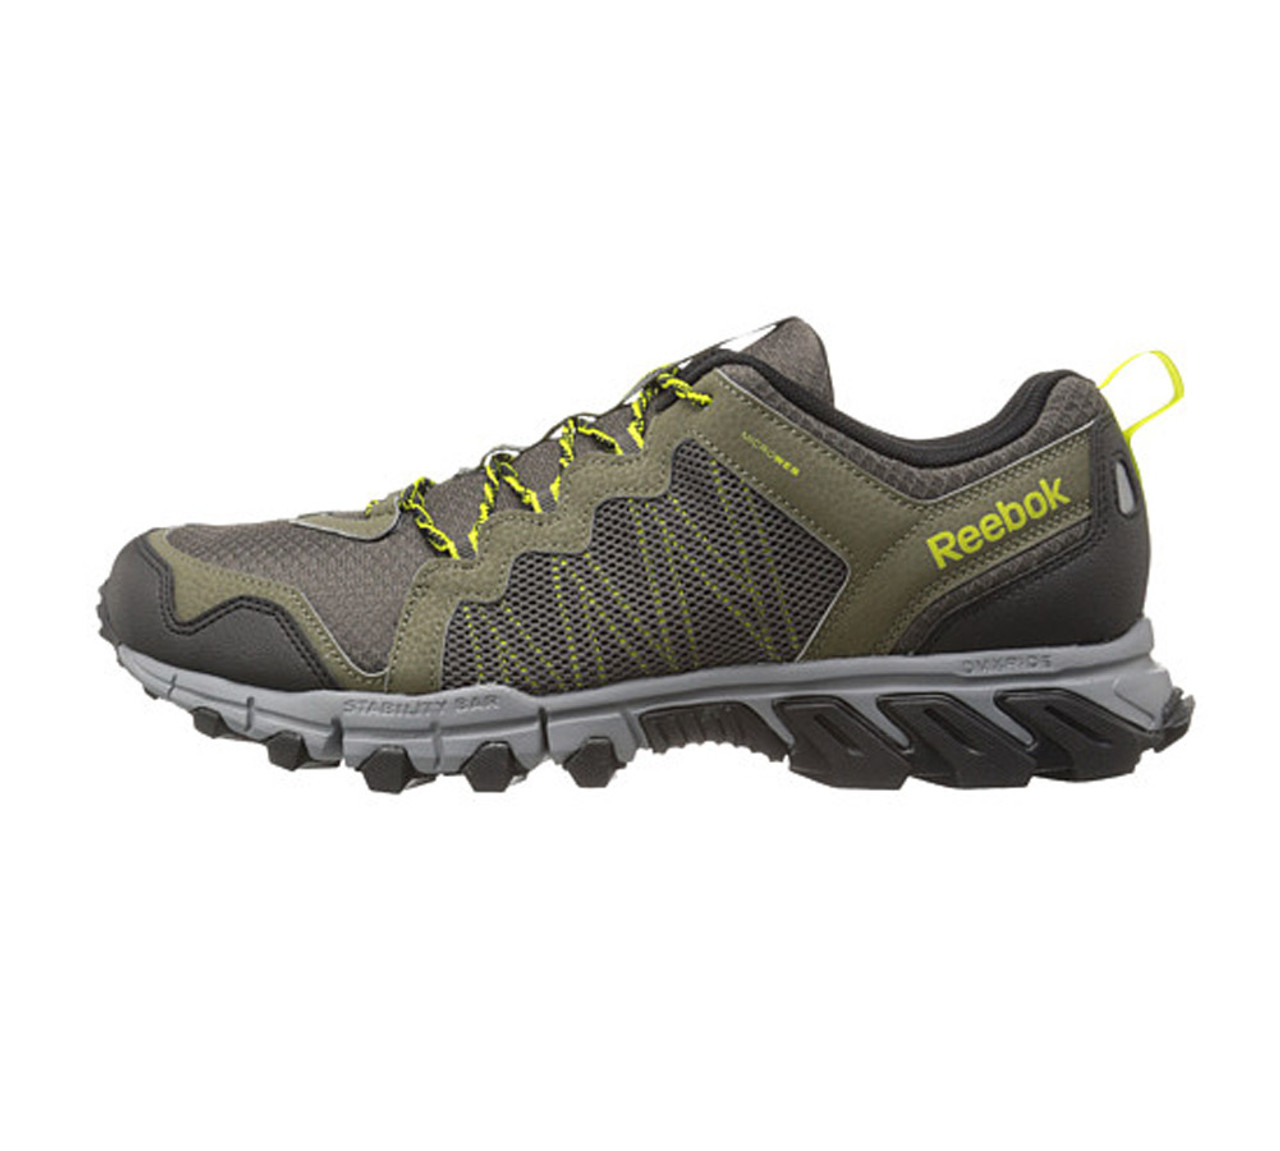 New Reebok Men's Trailgrip RS 4.0 Running Shoe - Olive/Green/Grey/Stone |  Discount Reebok Men's Athletic & More - Shoolu.com | Shoolu.com